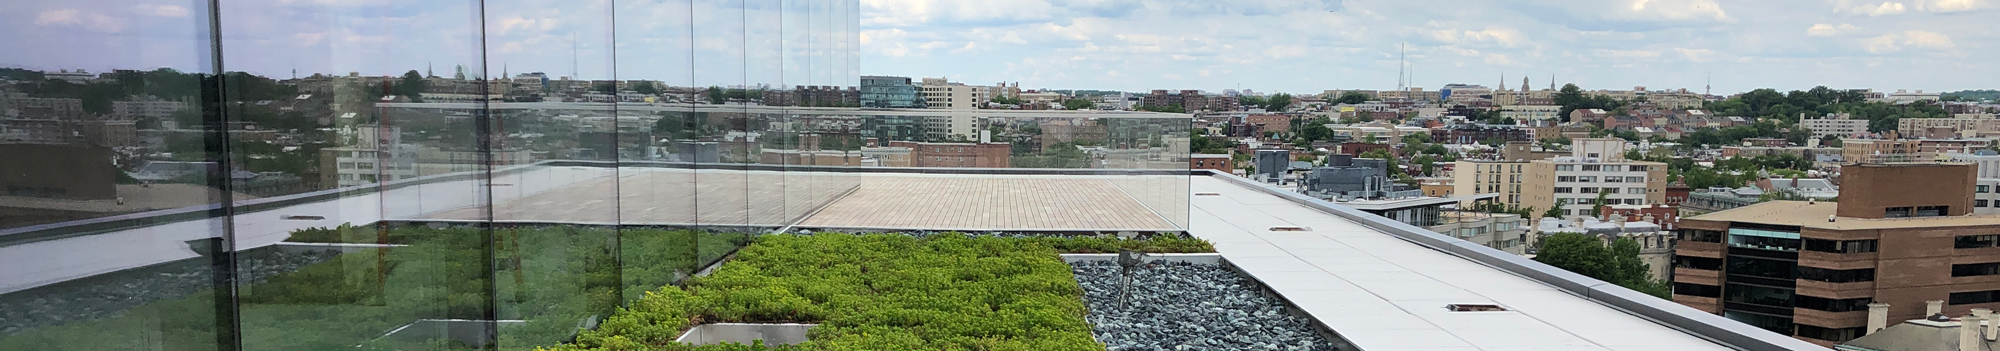 Green roof at 1333 New Hampshire NW Washington, DC